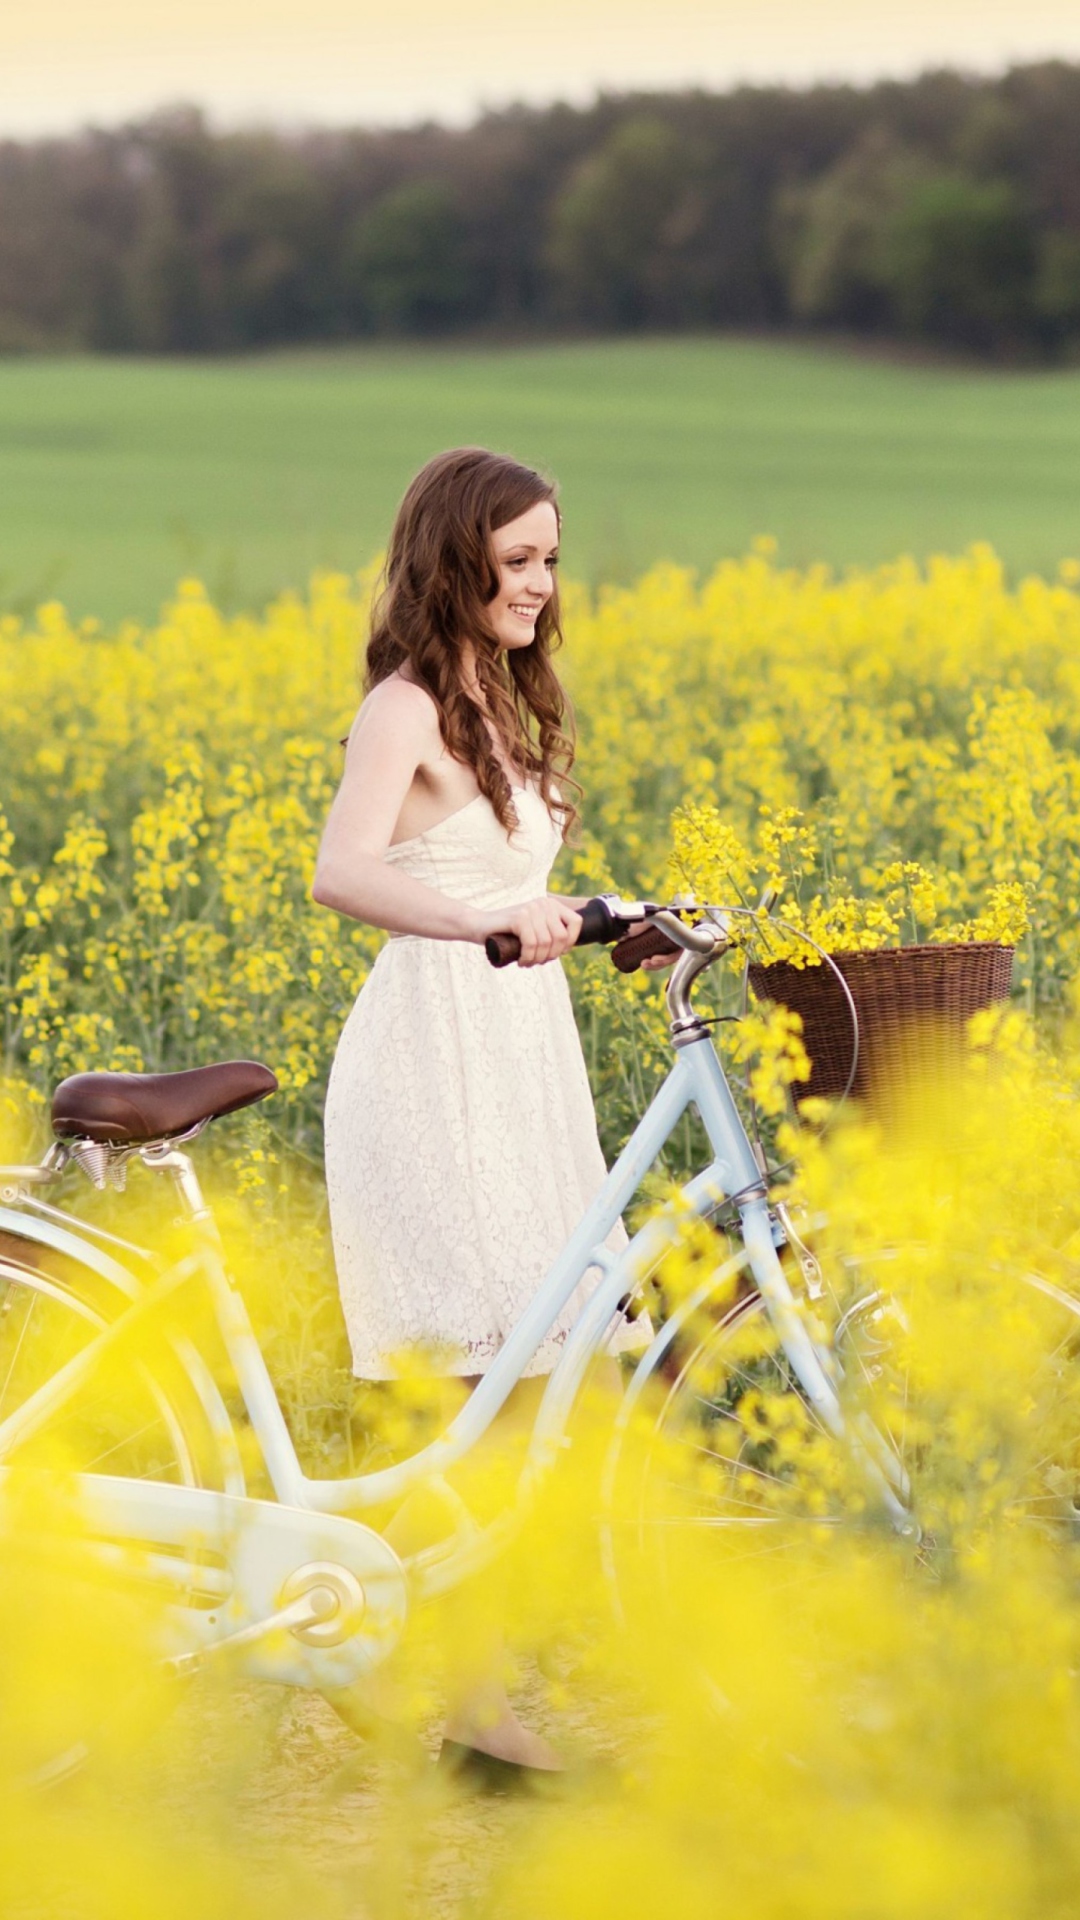 Обои Girl With Bicycle In Yellow Field 1080x1920